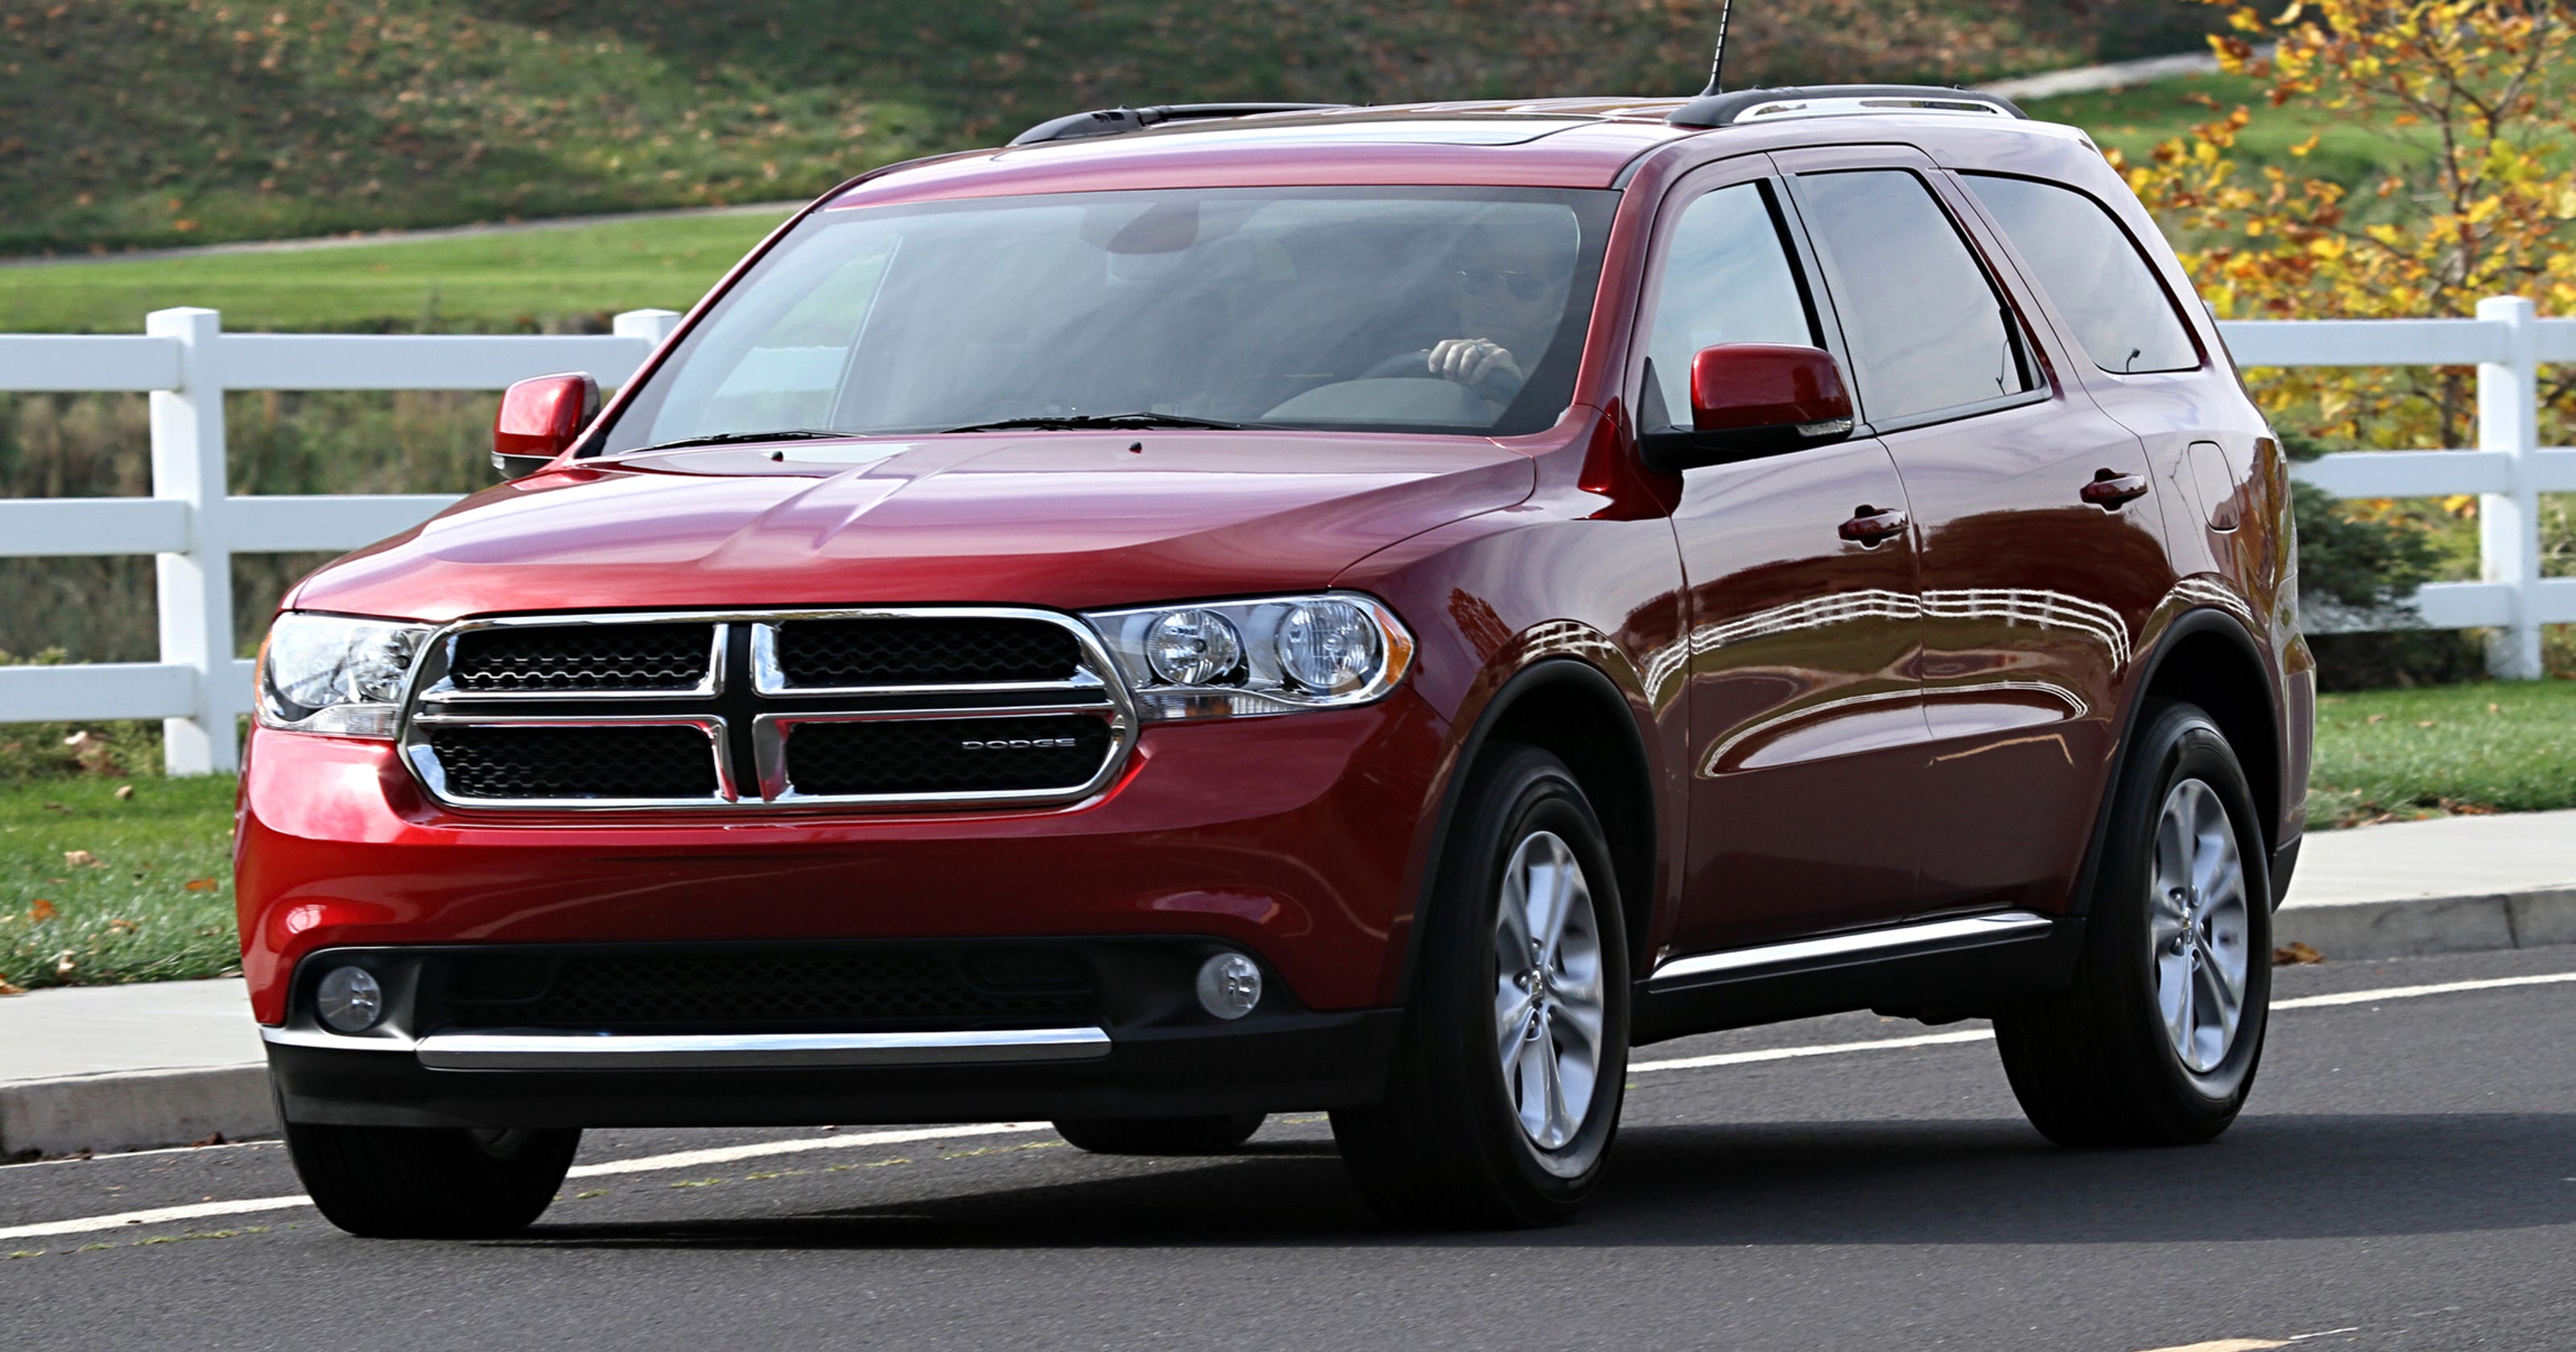 Chrysler recalling Jeep, Dodge SUVs for brakes